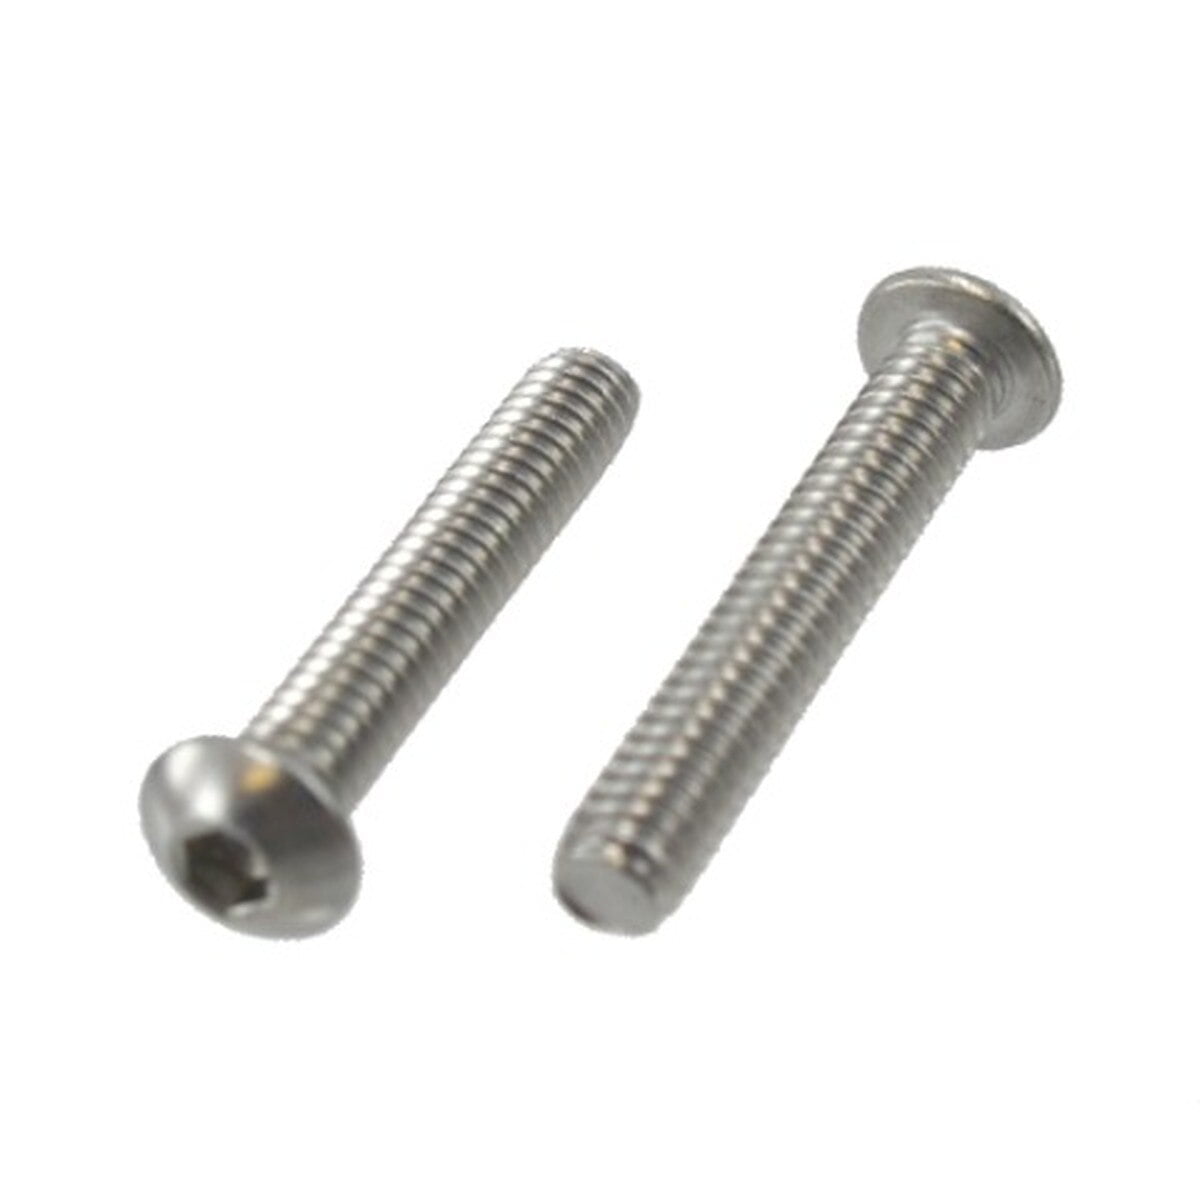 Button Head Socket Cap Screw Stainless Steel Screws UNC #10-24 x 1-1/2 Qty 25 